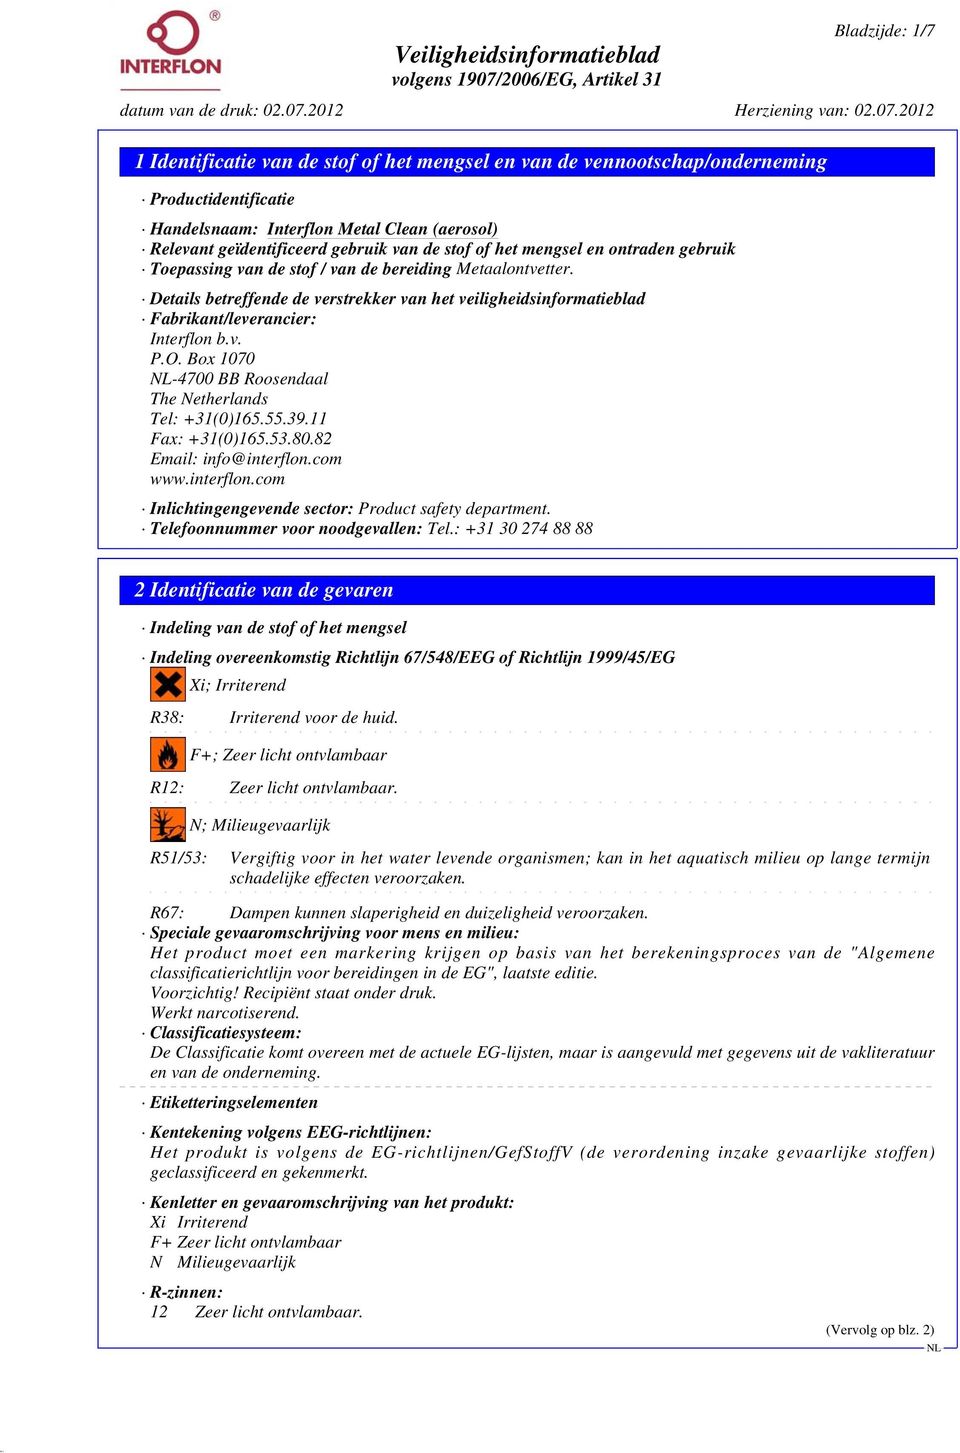 Details betreffende de verstrekker van het veiligheidsinformatieblad Fabrikant/leverancier: Interflon b.v. P.O. Box 1070-4700 BB Roosendaal The Netherlands Tel: +31(0)165.55.39.11 Fax: +31(0)165.53.